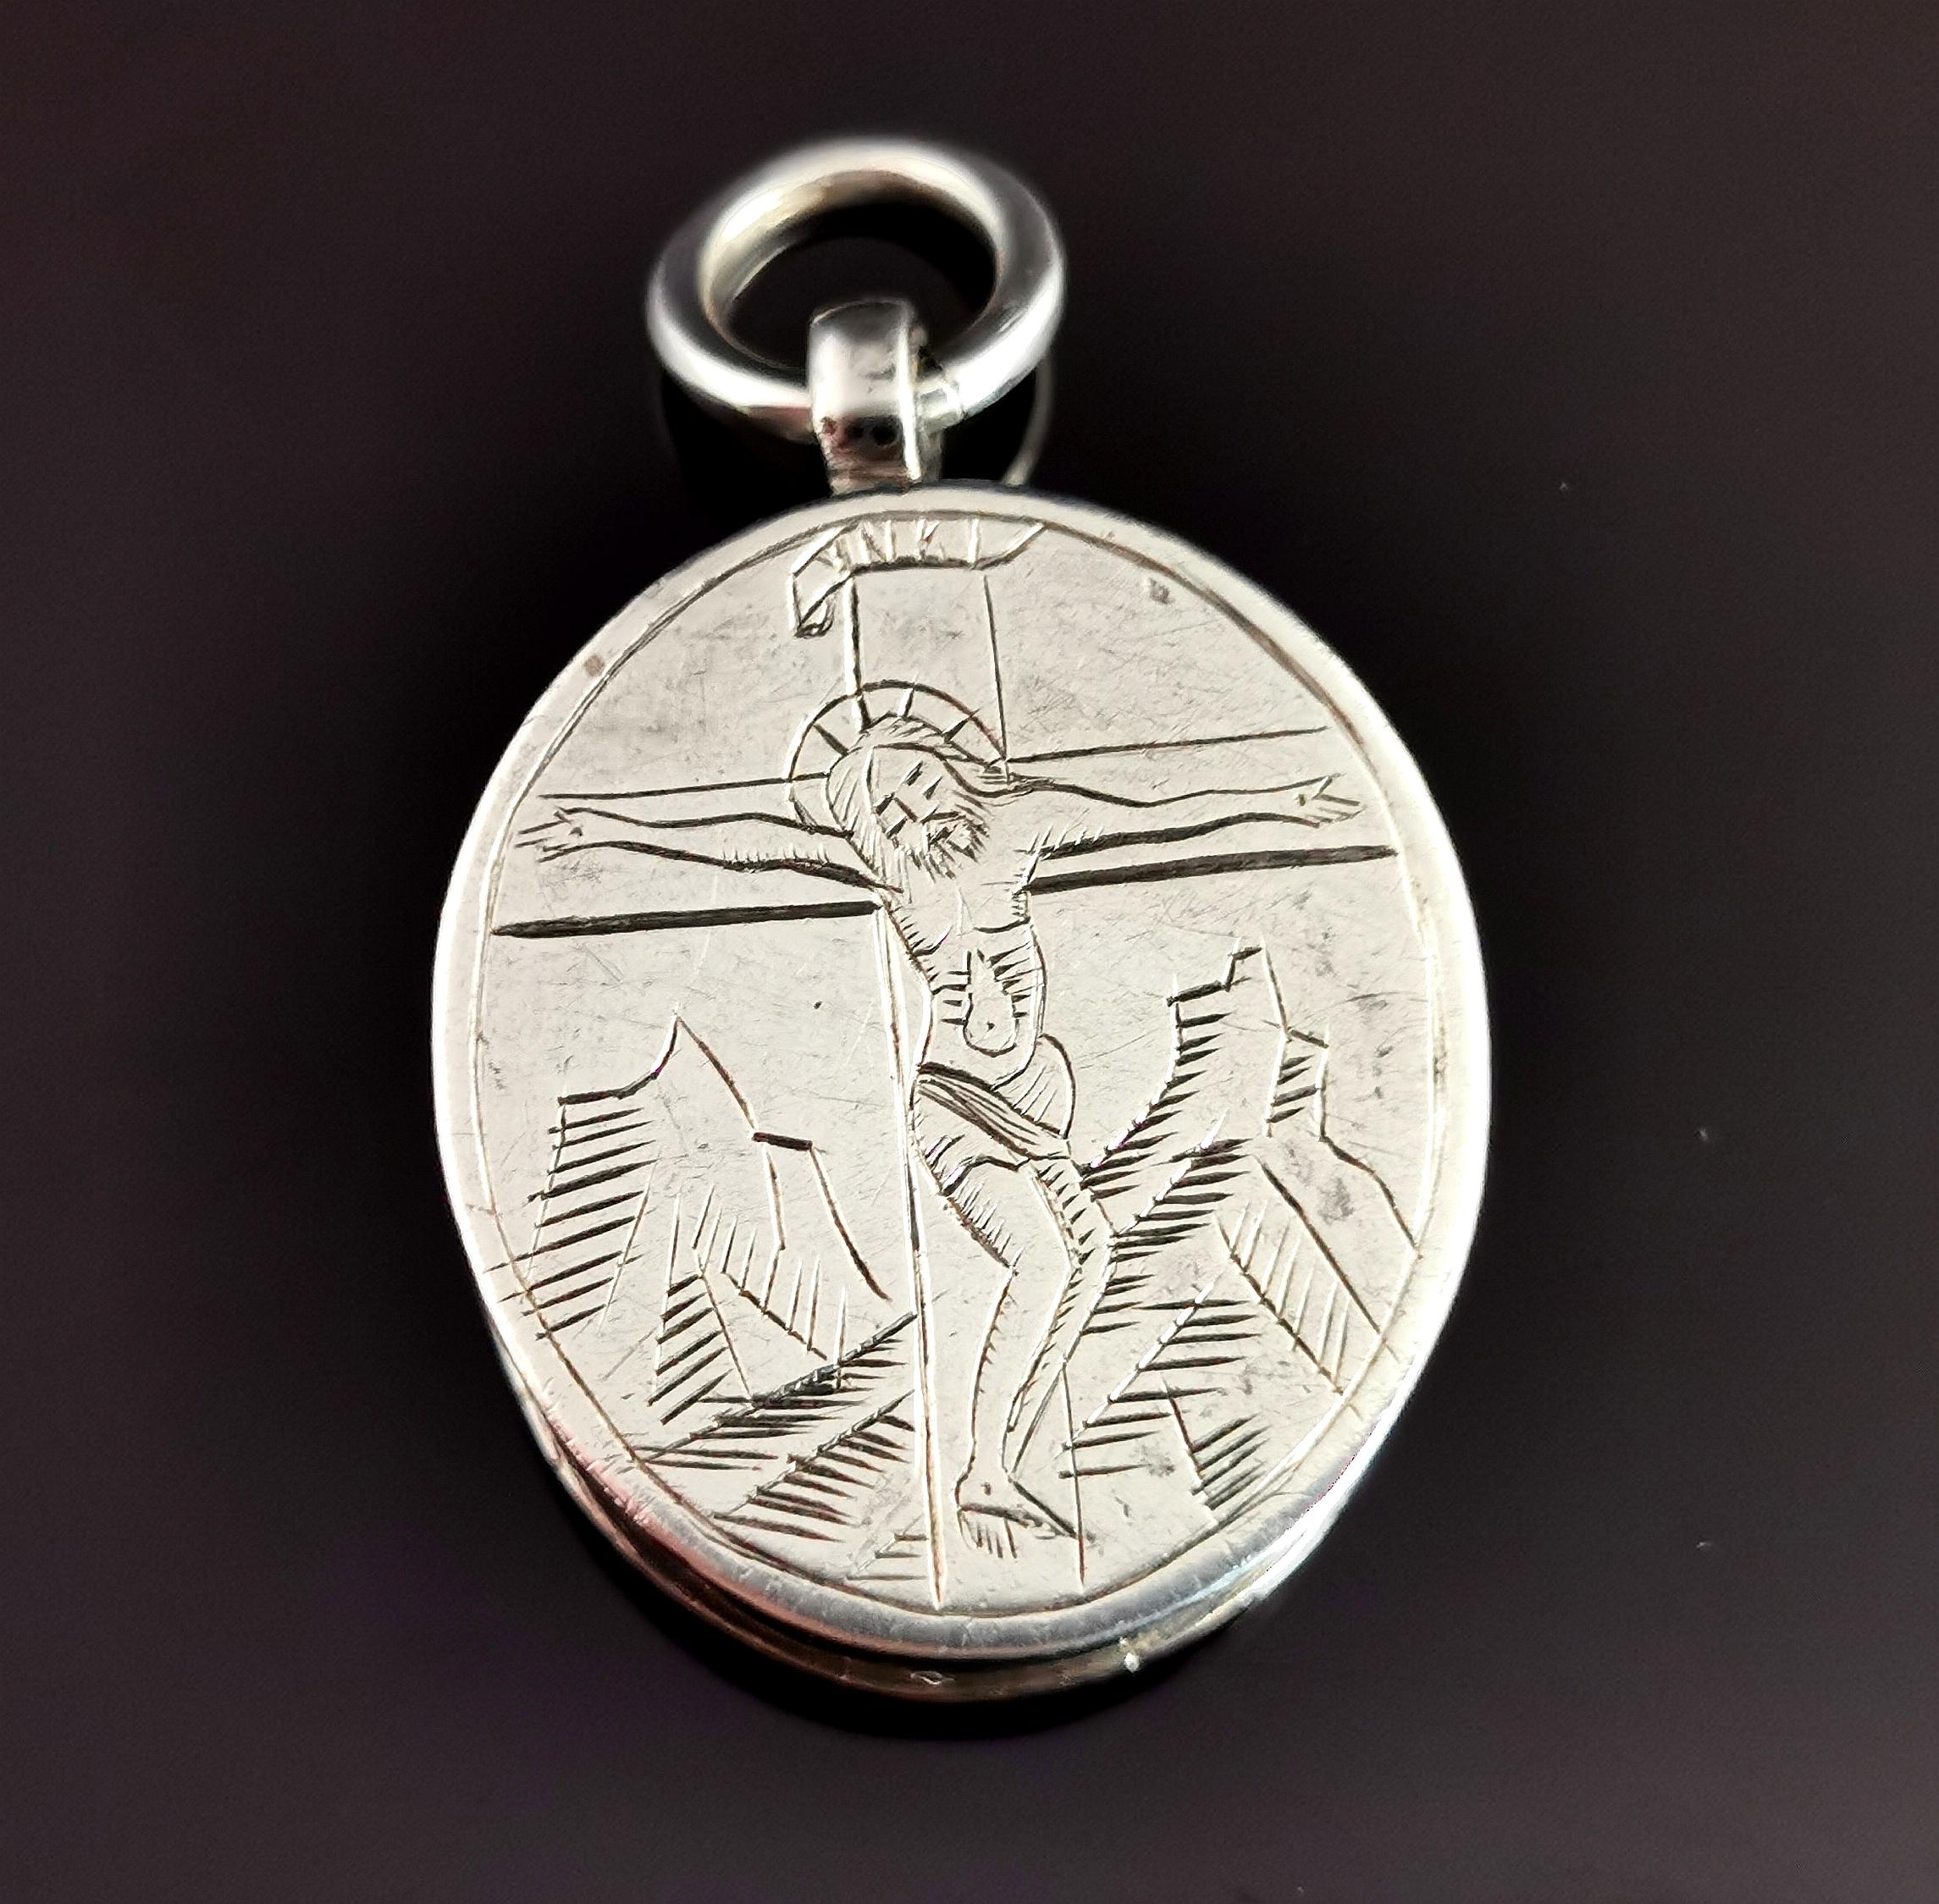 Antique Silver Reliquary Locket Pendant, Inri, Mourning, Religious For Sale 3